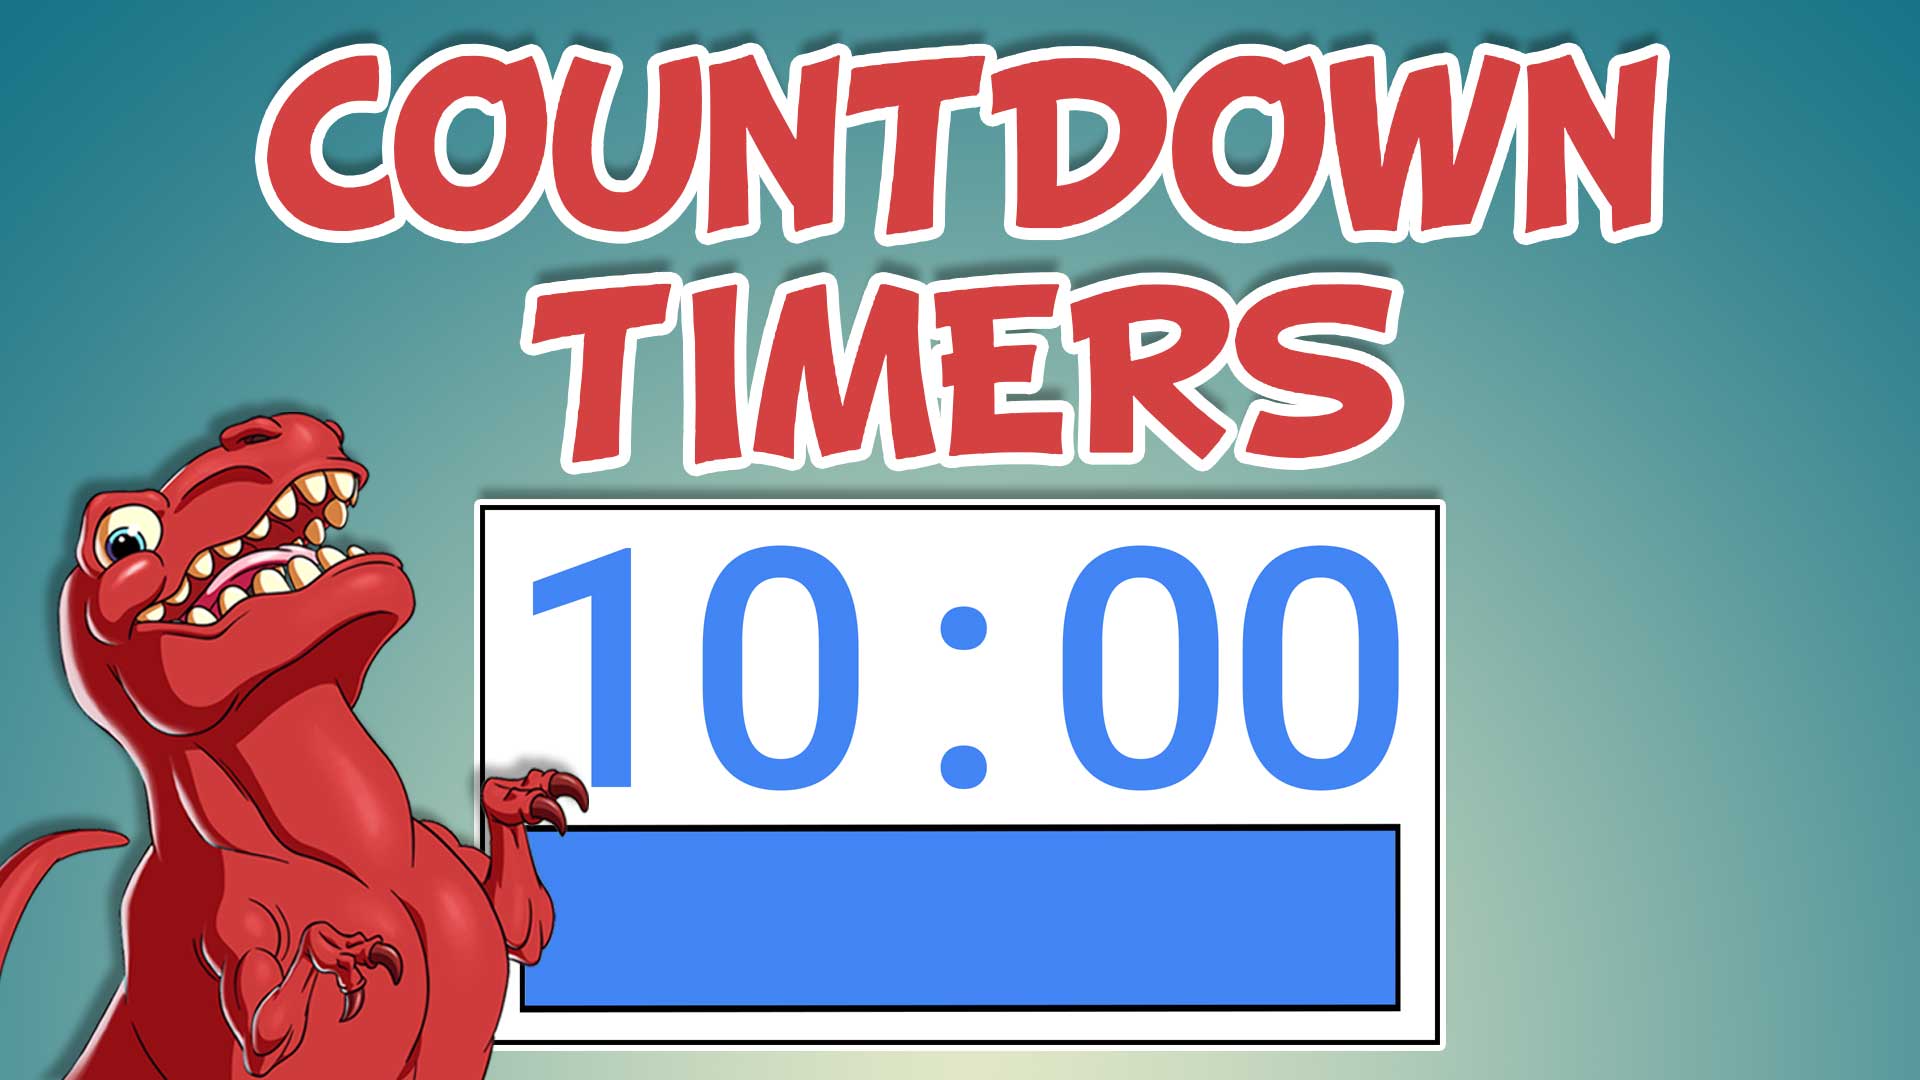 online countdown timer clock